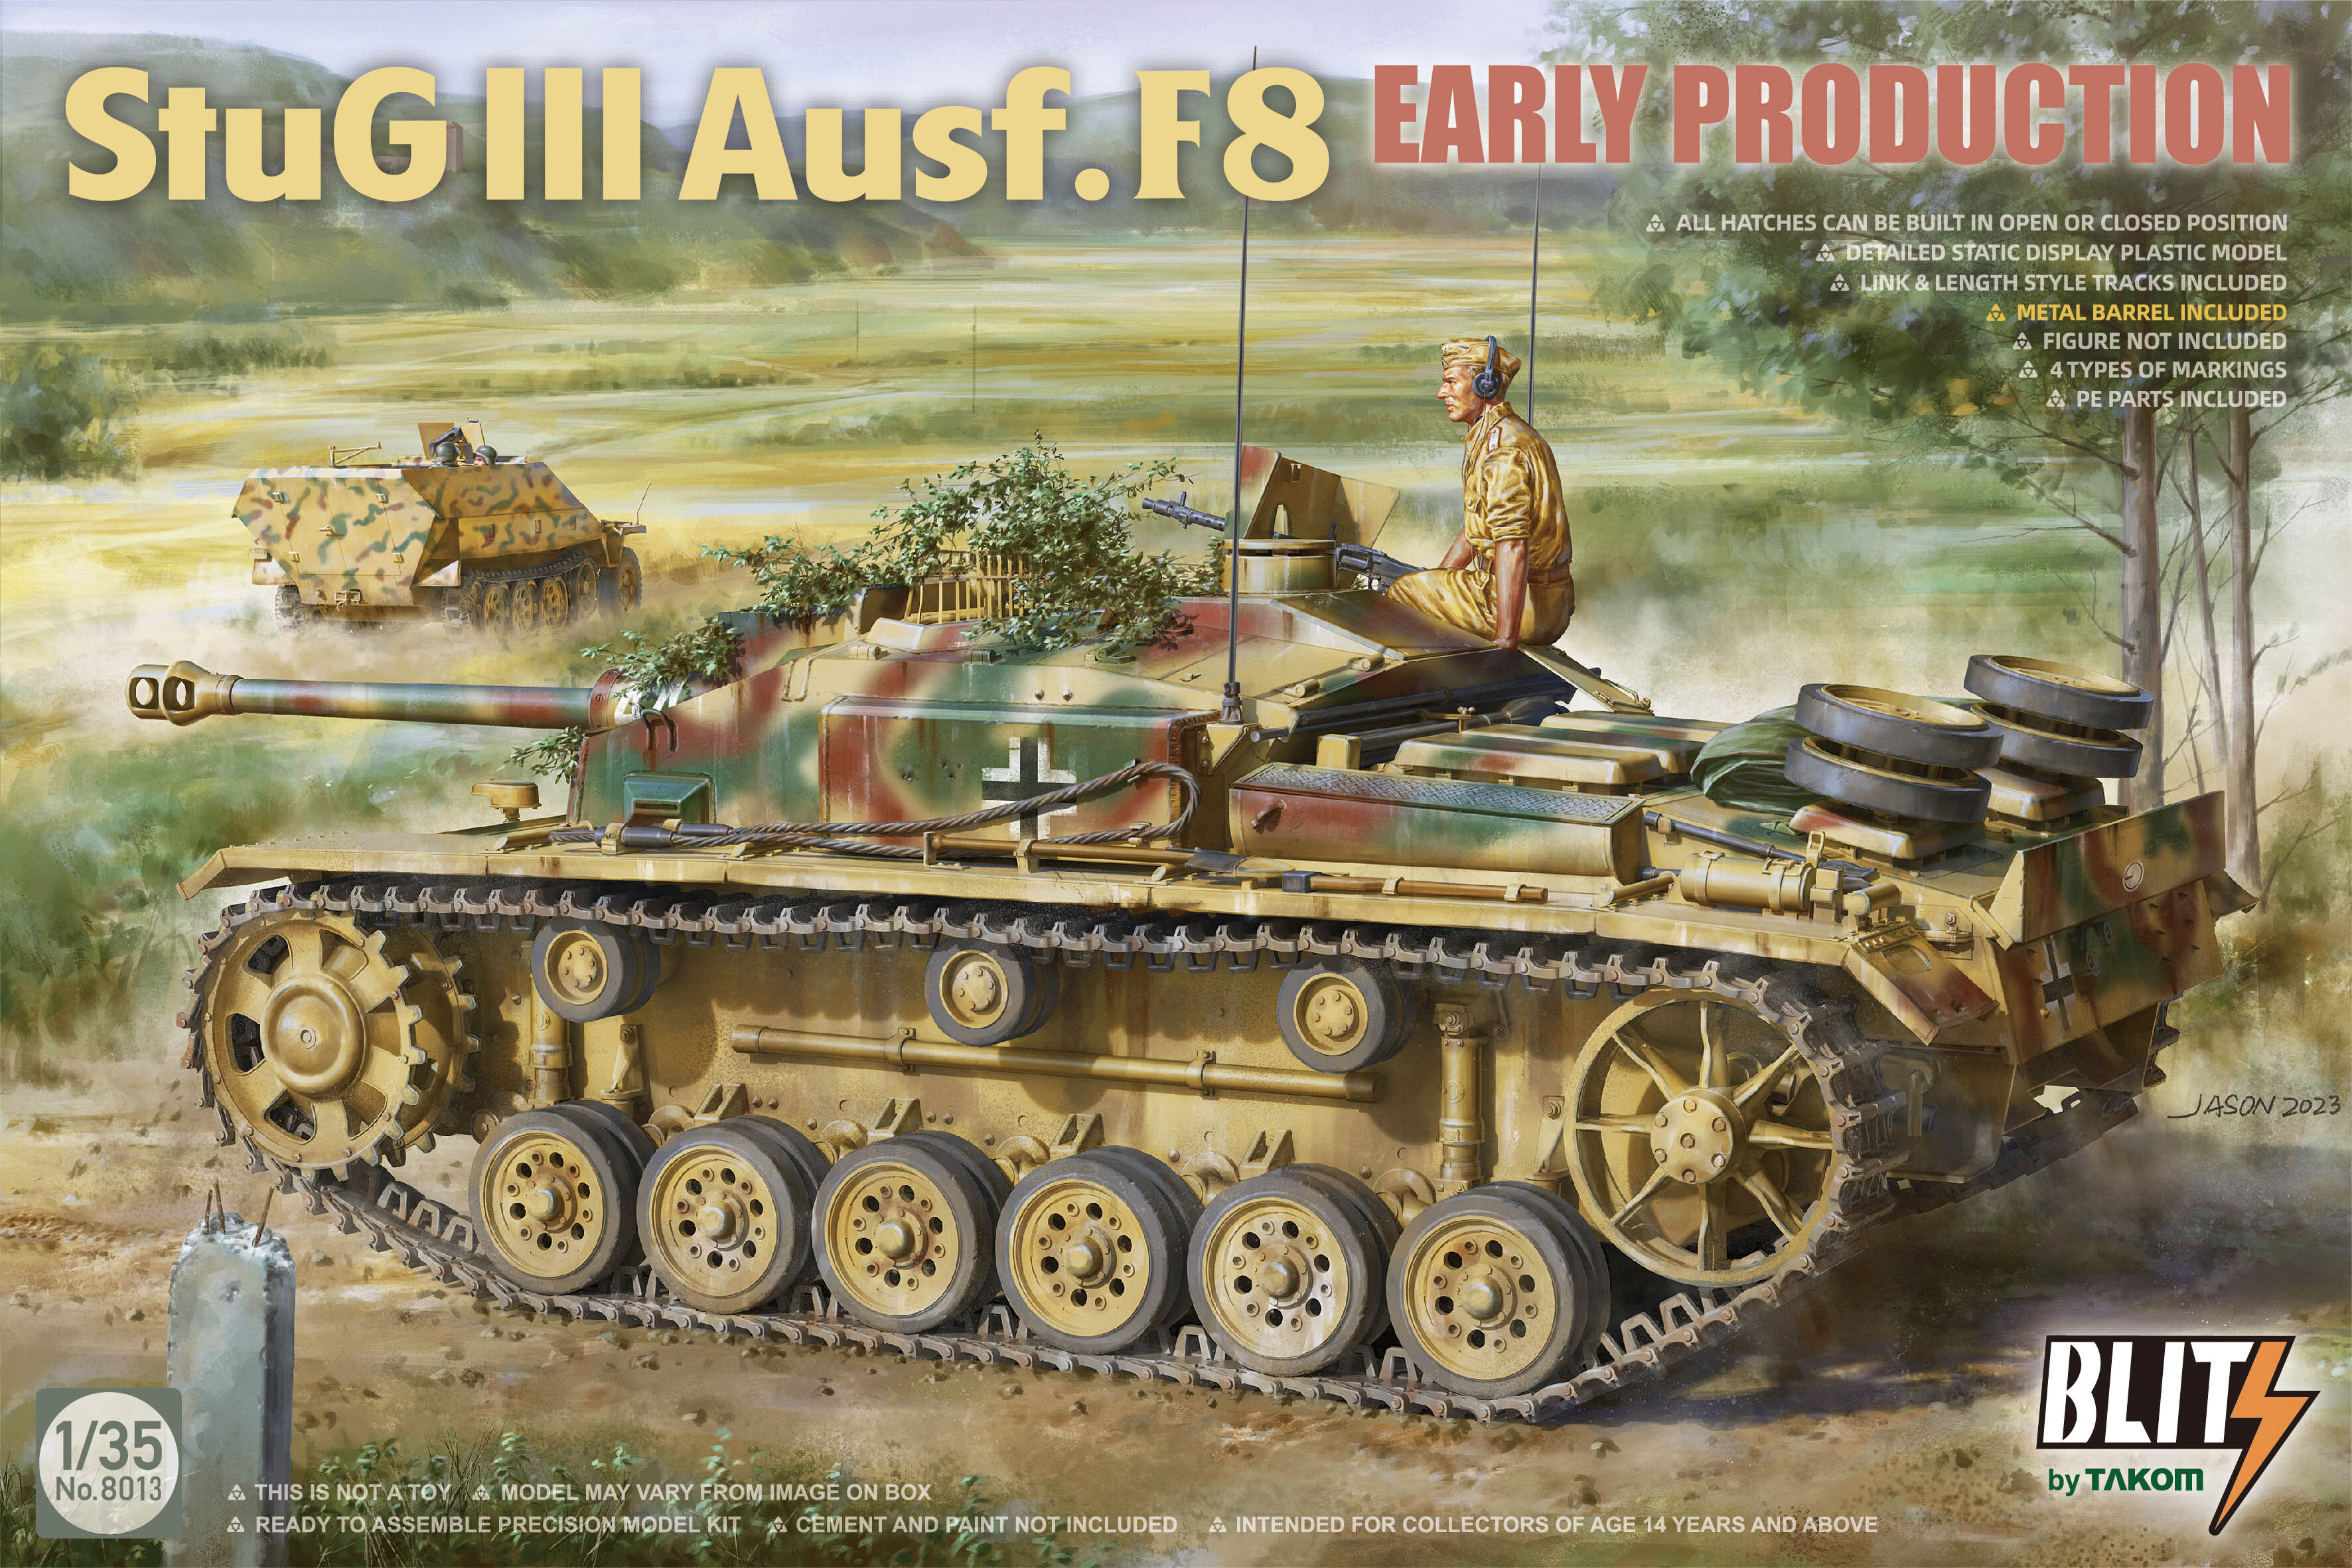 StuG III Ausf.F8 Early